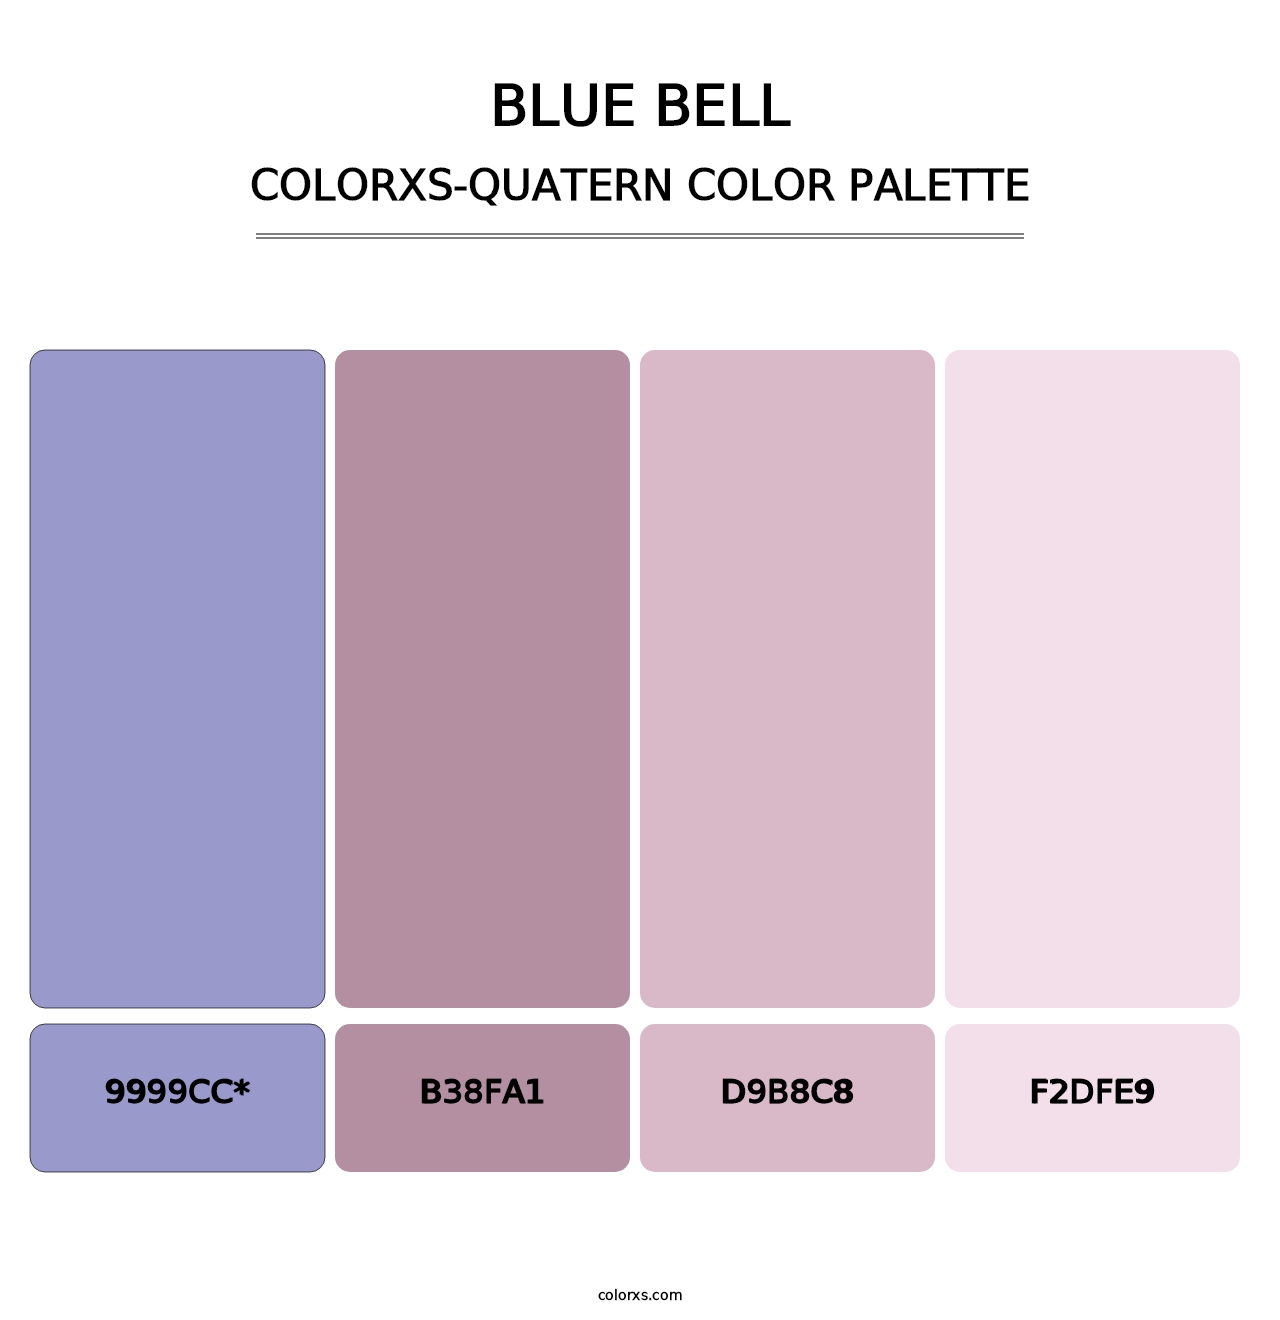 Blue Bell - Colorxs Quatern Palette